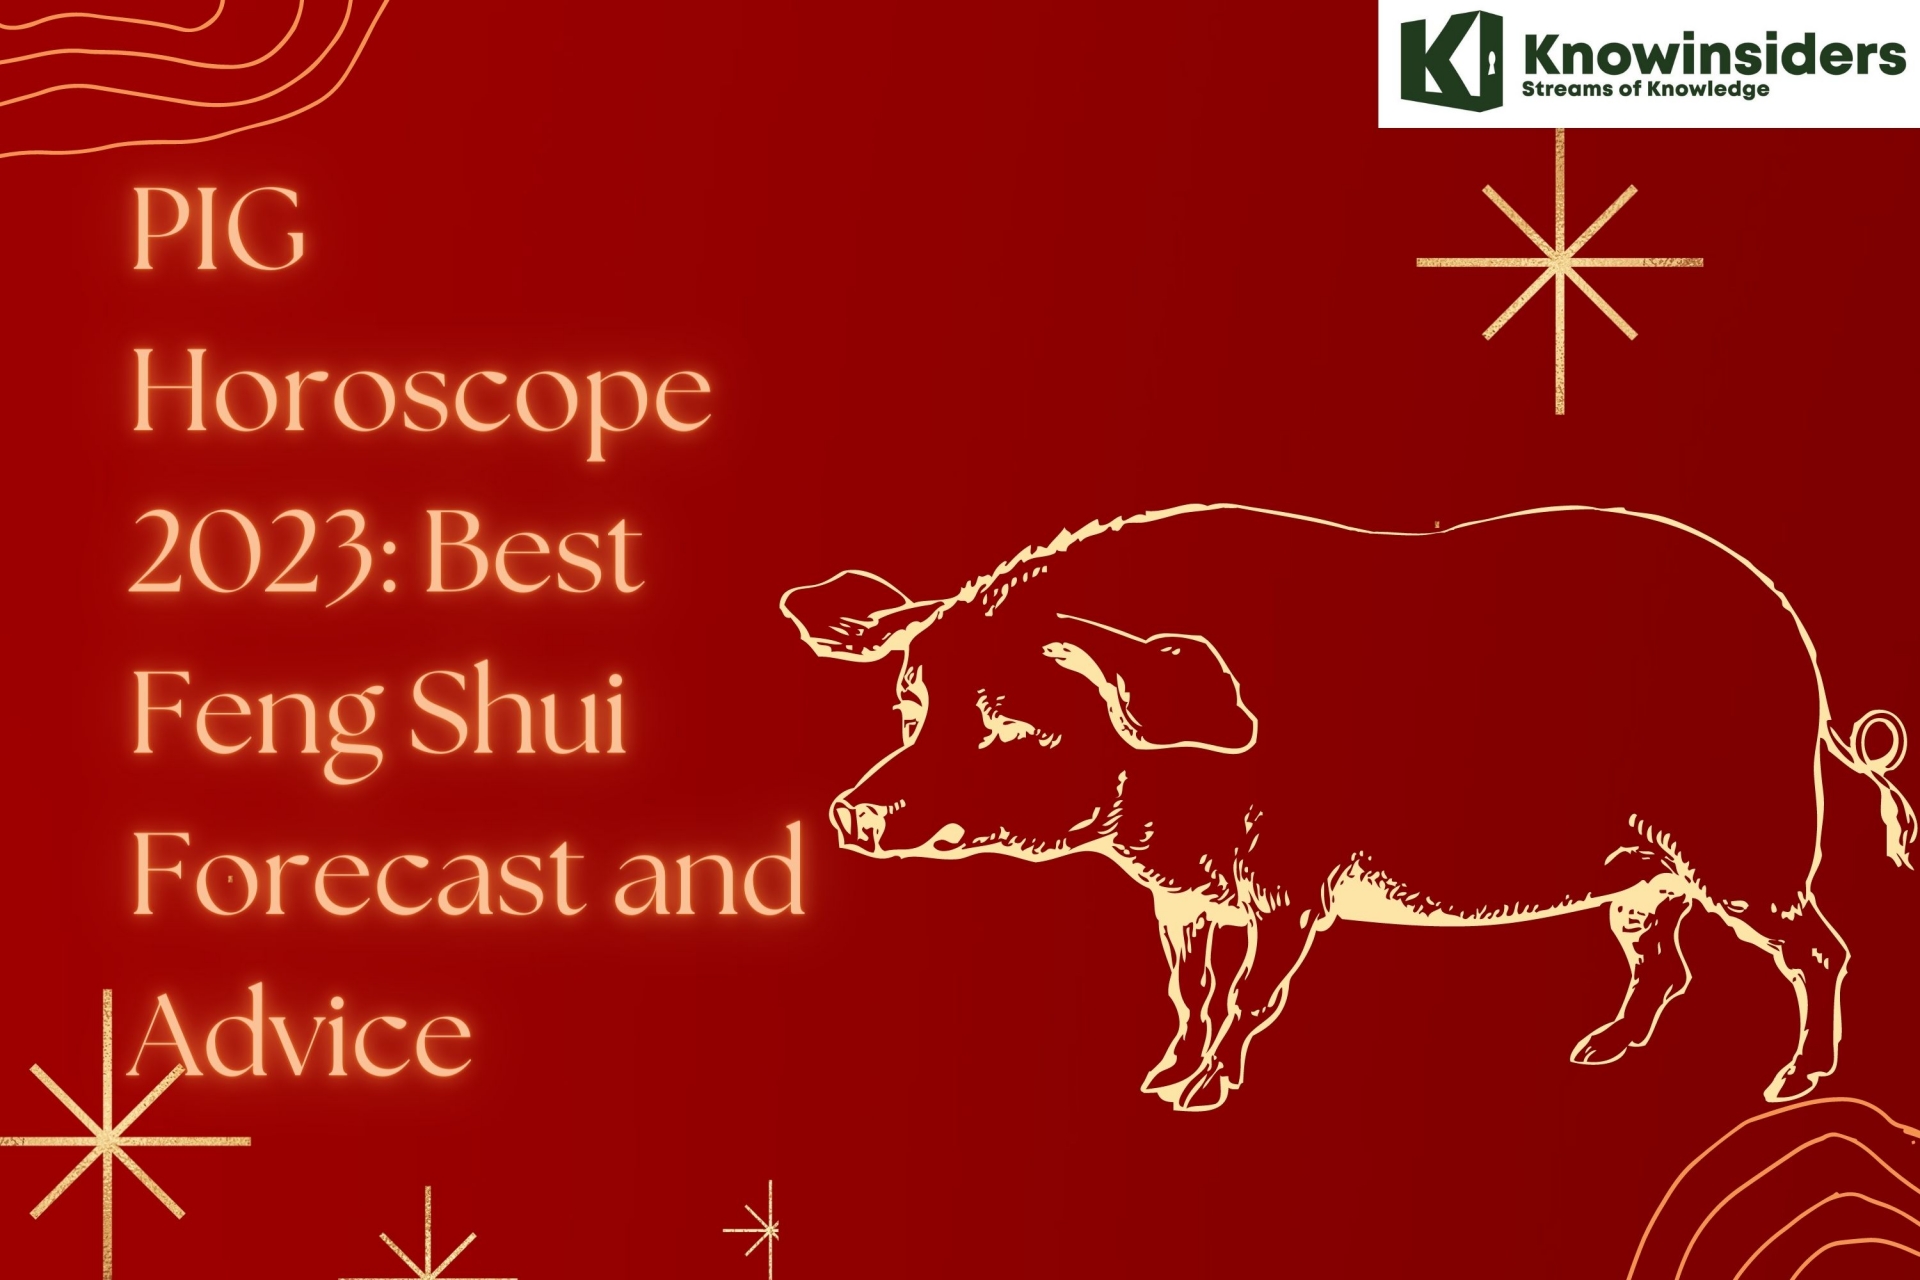 PIG Horoscope 2023: Best Feng Shui Forecast and Advice